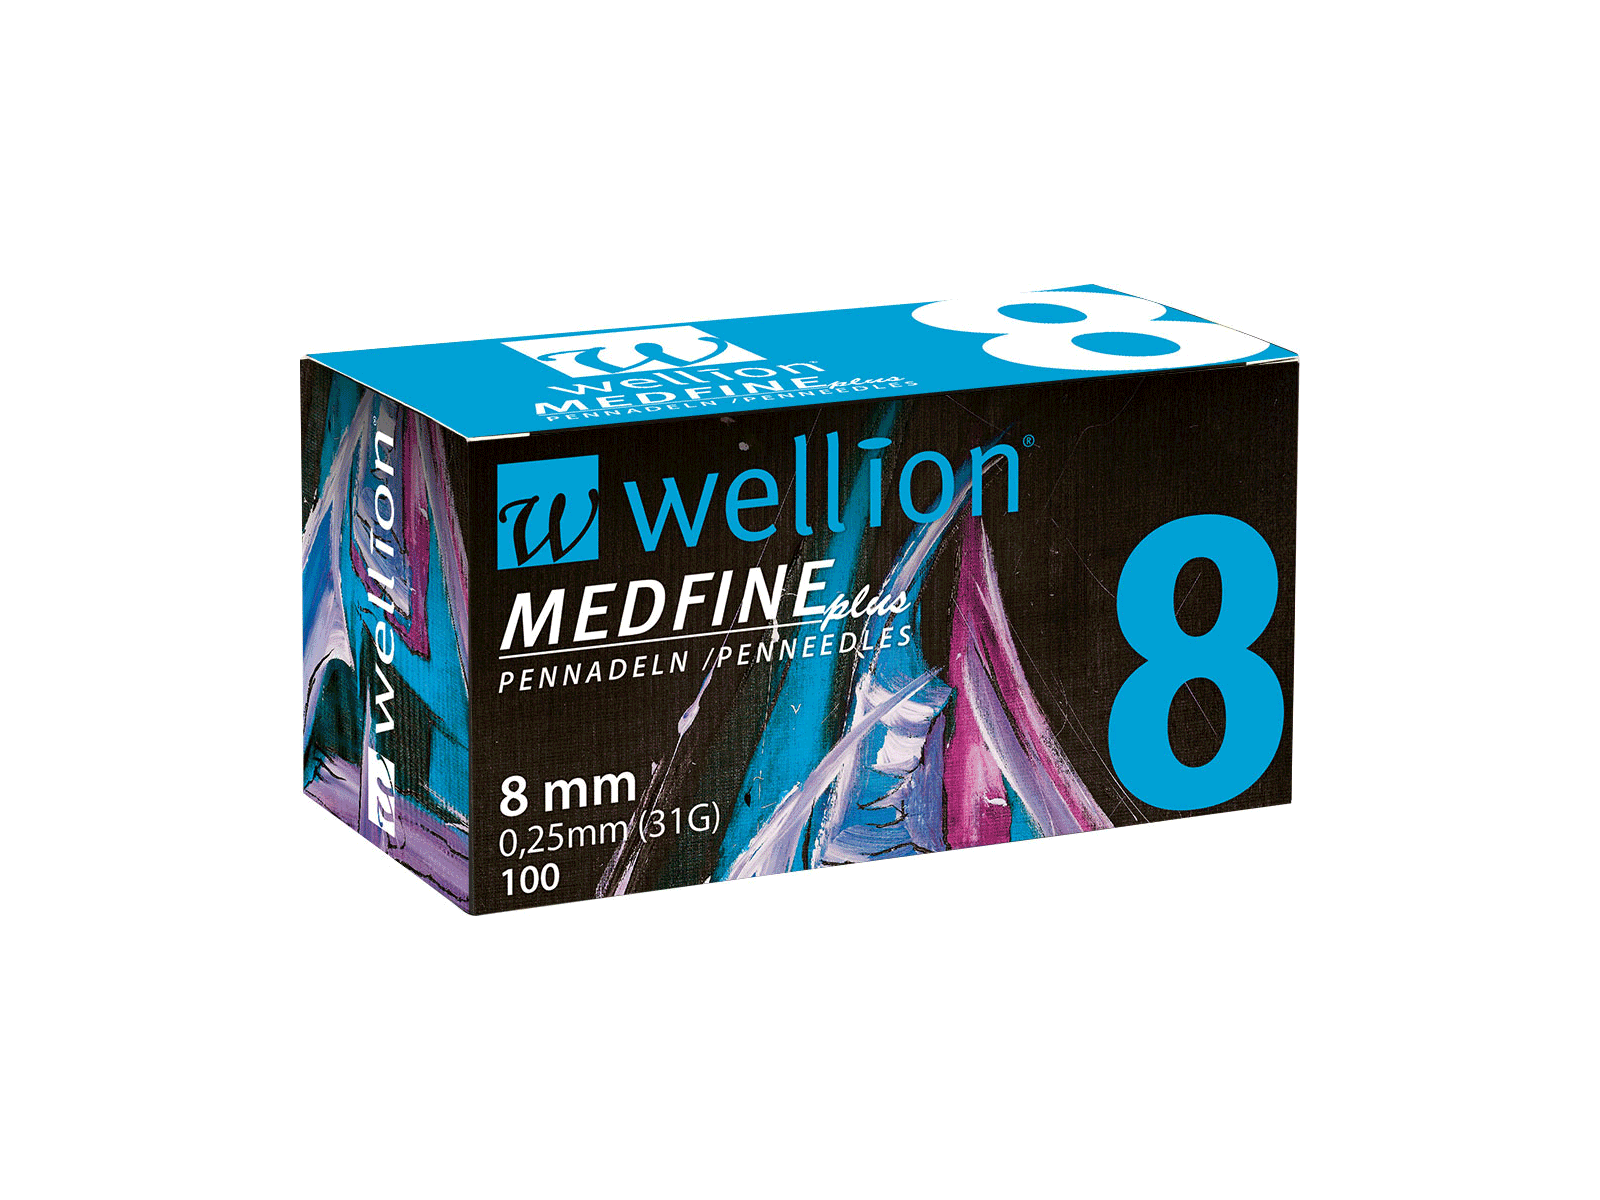 WELL108 Wellion MEDFINE plus Pennadeln, 8 mm, 100 Stück